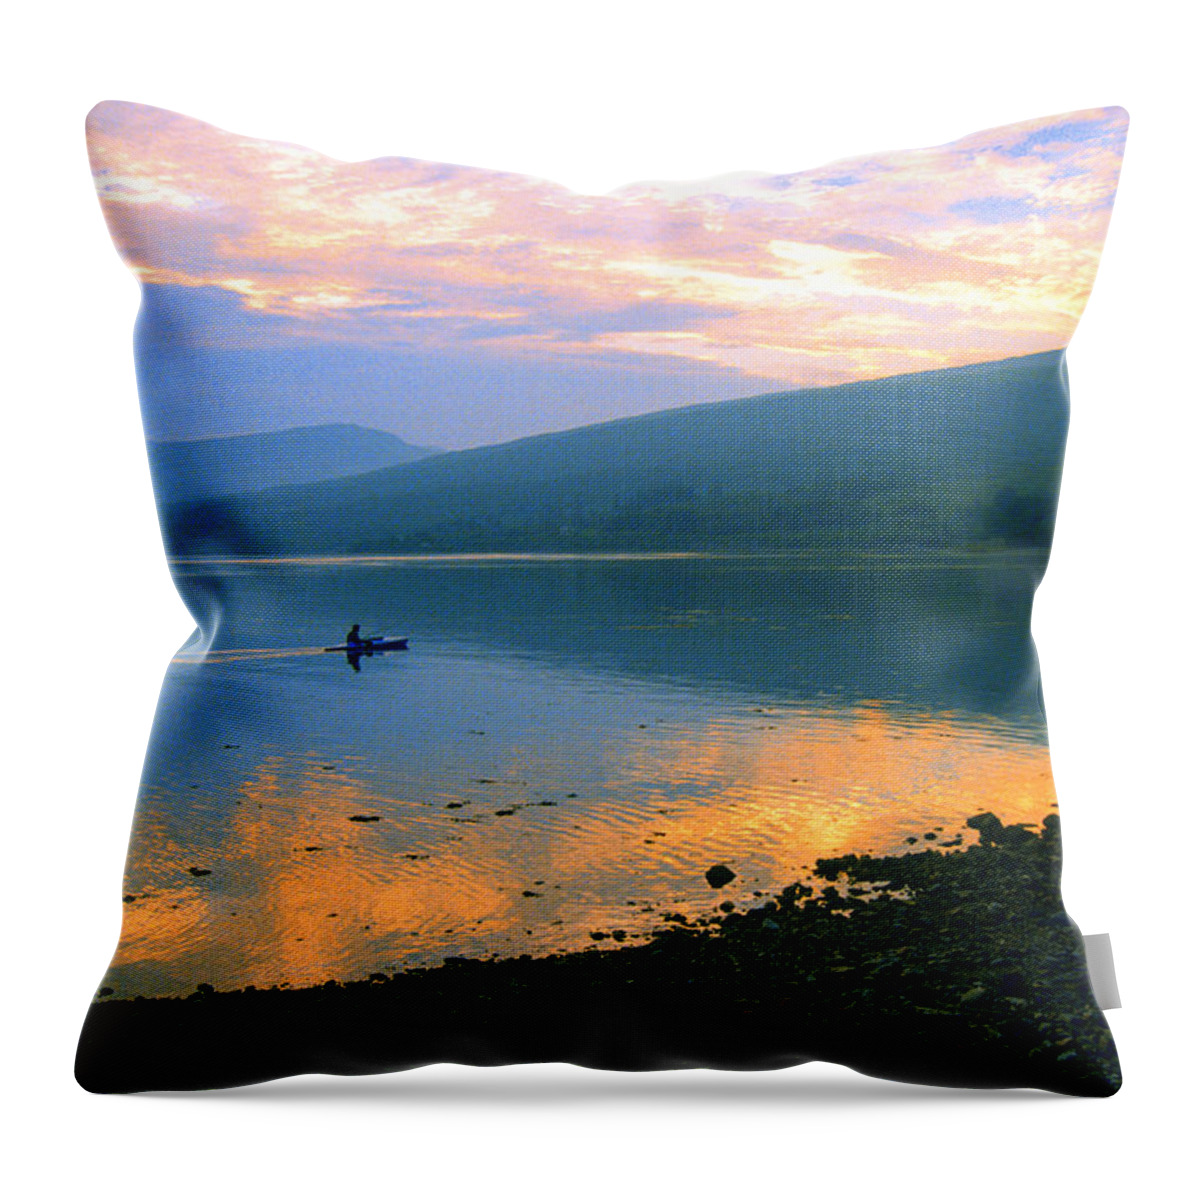 Sunset Canoe On Loch Linnhe Throw Pillow featuring the photograph Sunset Canoe by Gordon James